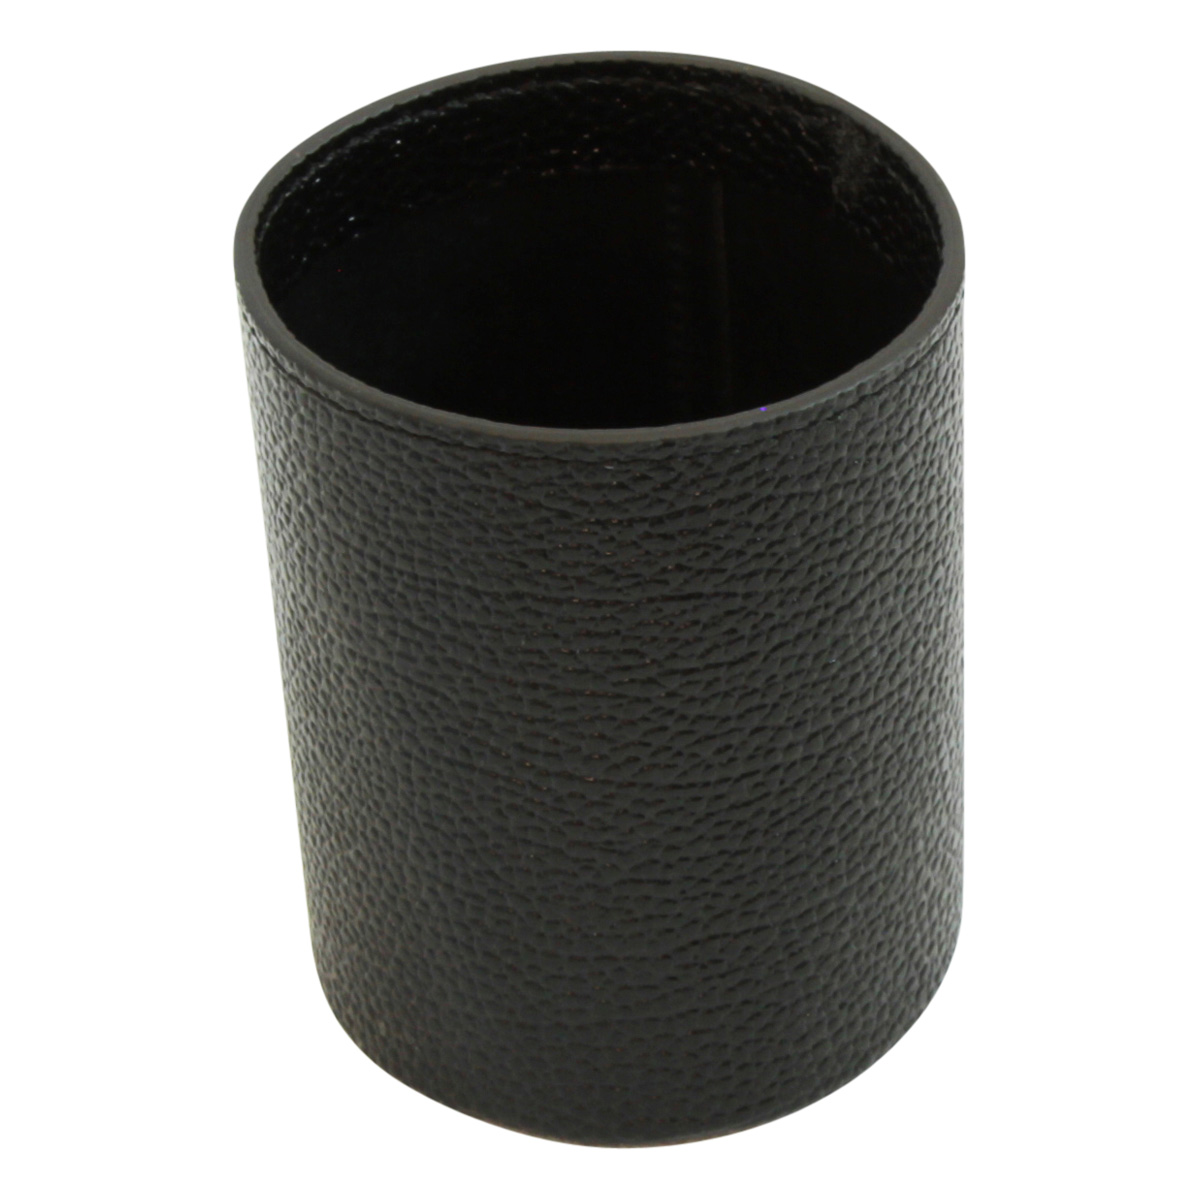 Leather pen cup - black | 763051NE UK | Old Angler Firenze